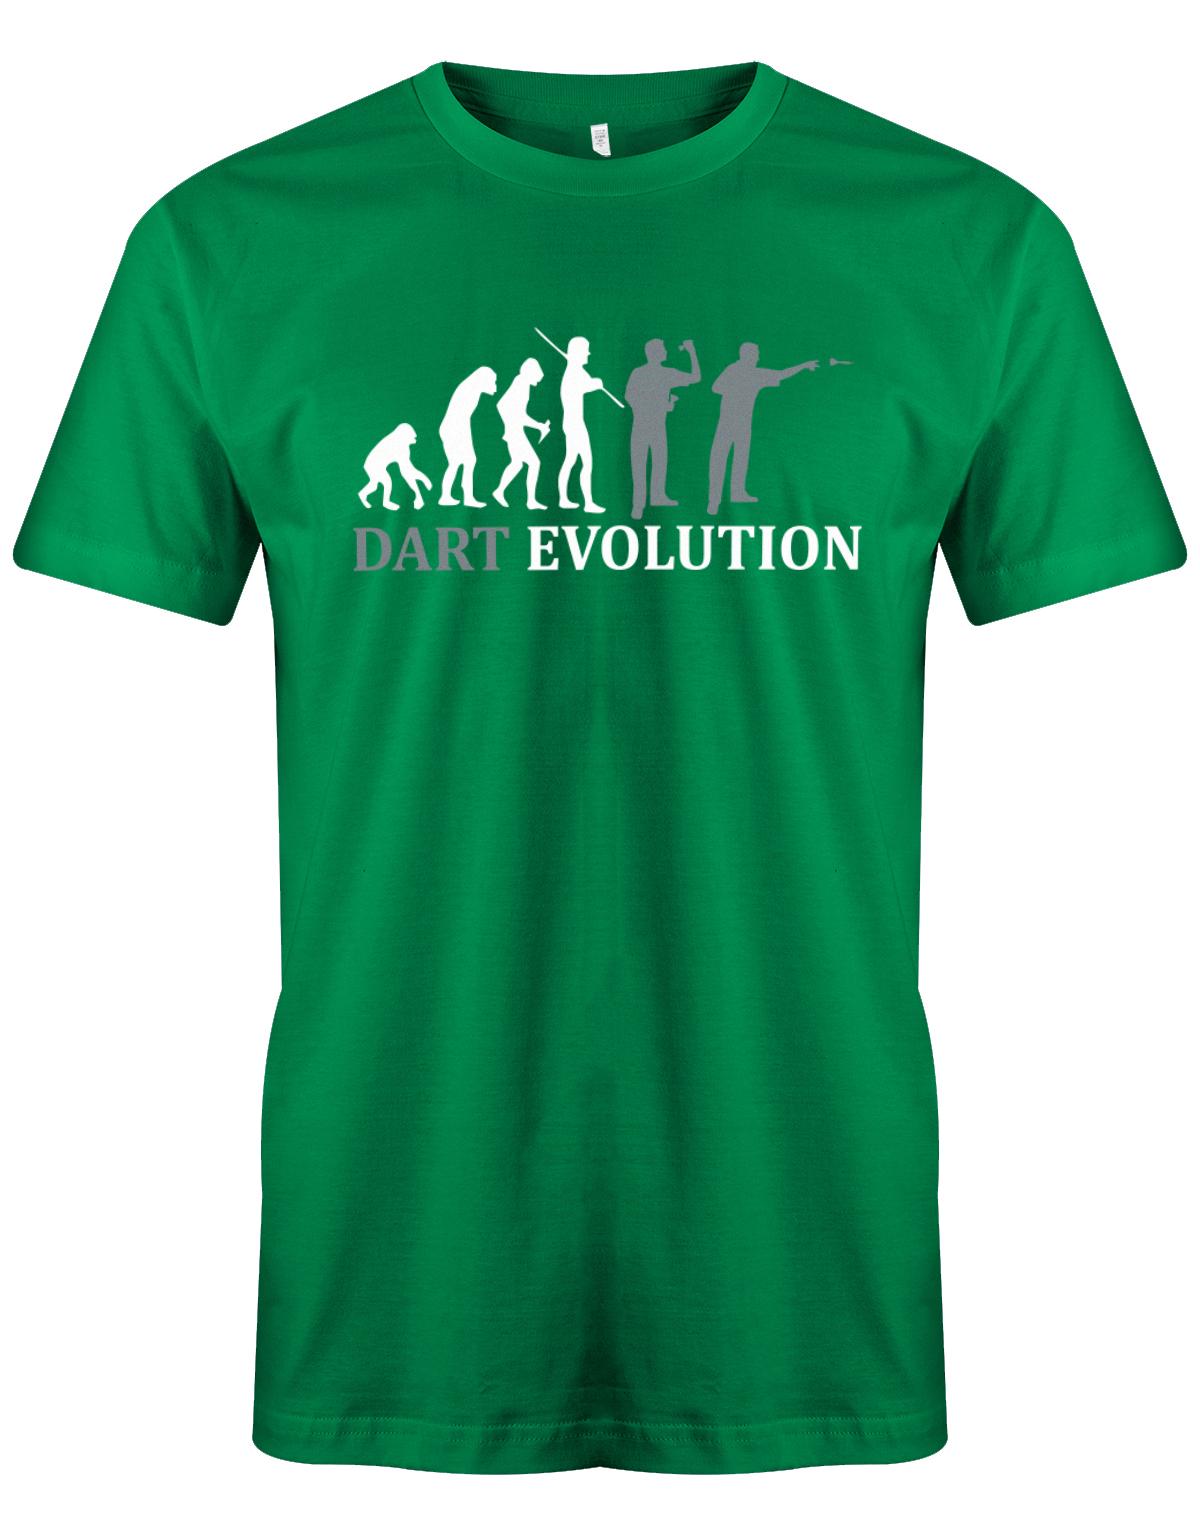 Dart Evolution